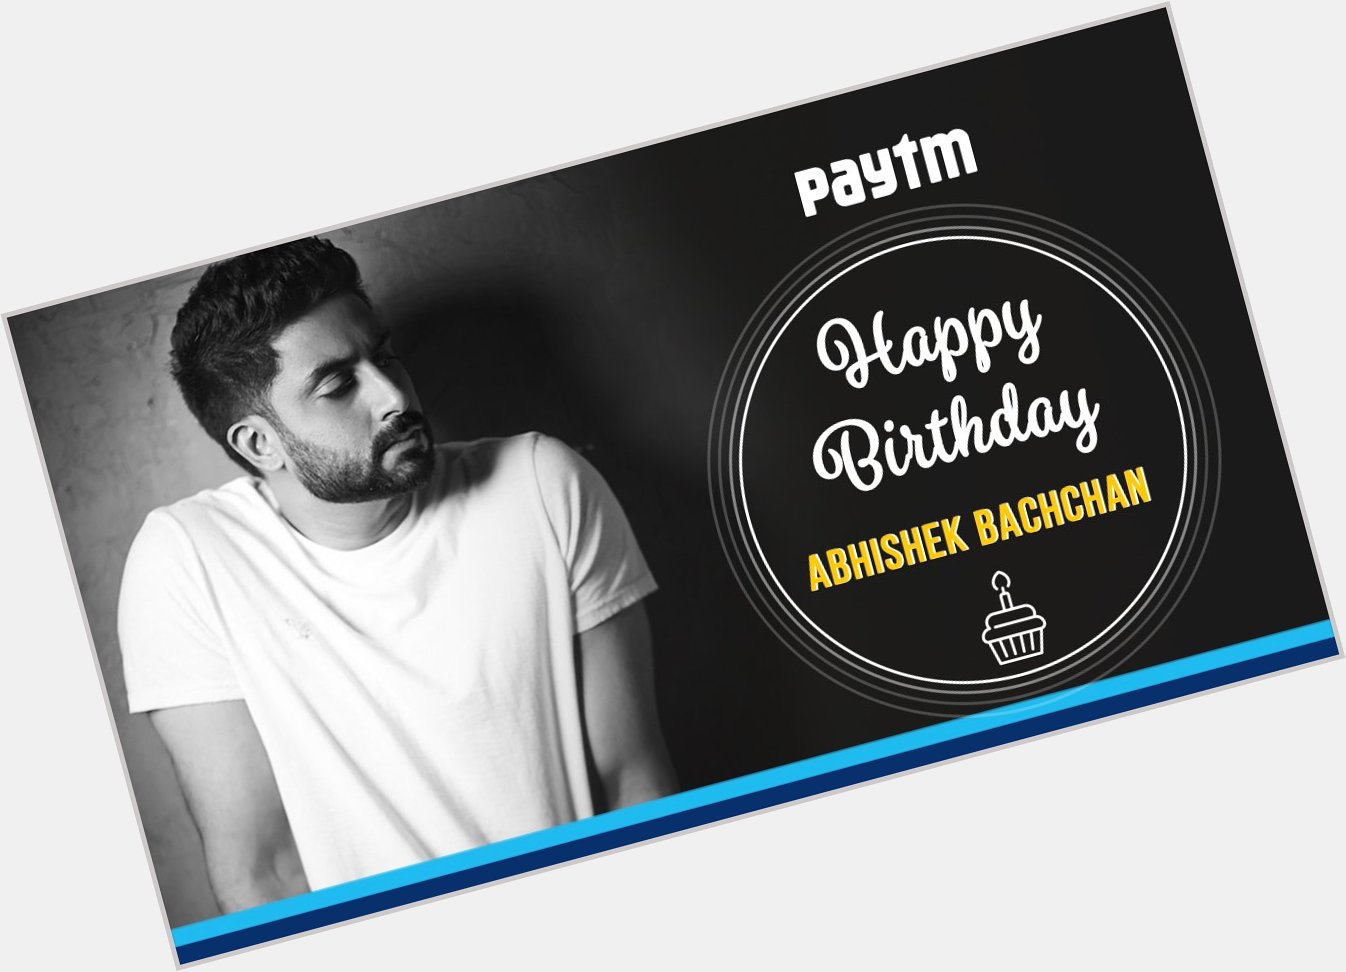 Wishing a very Happy Birthday to Abhishek Bachchan! 